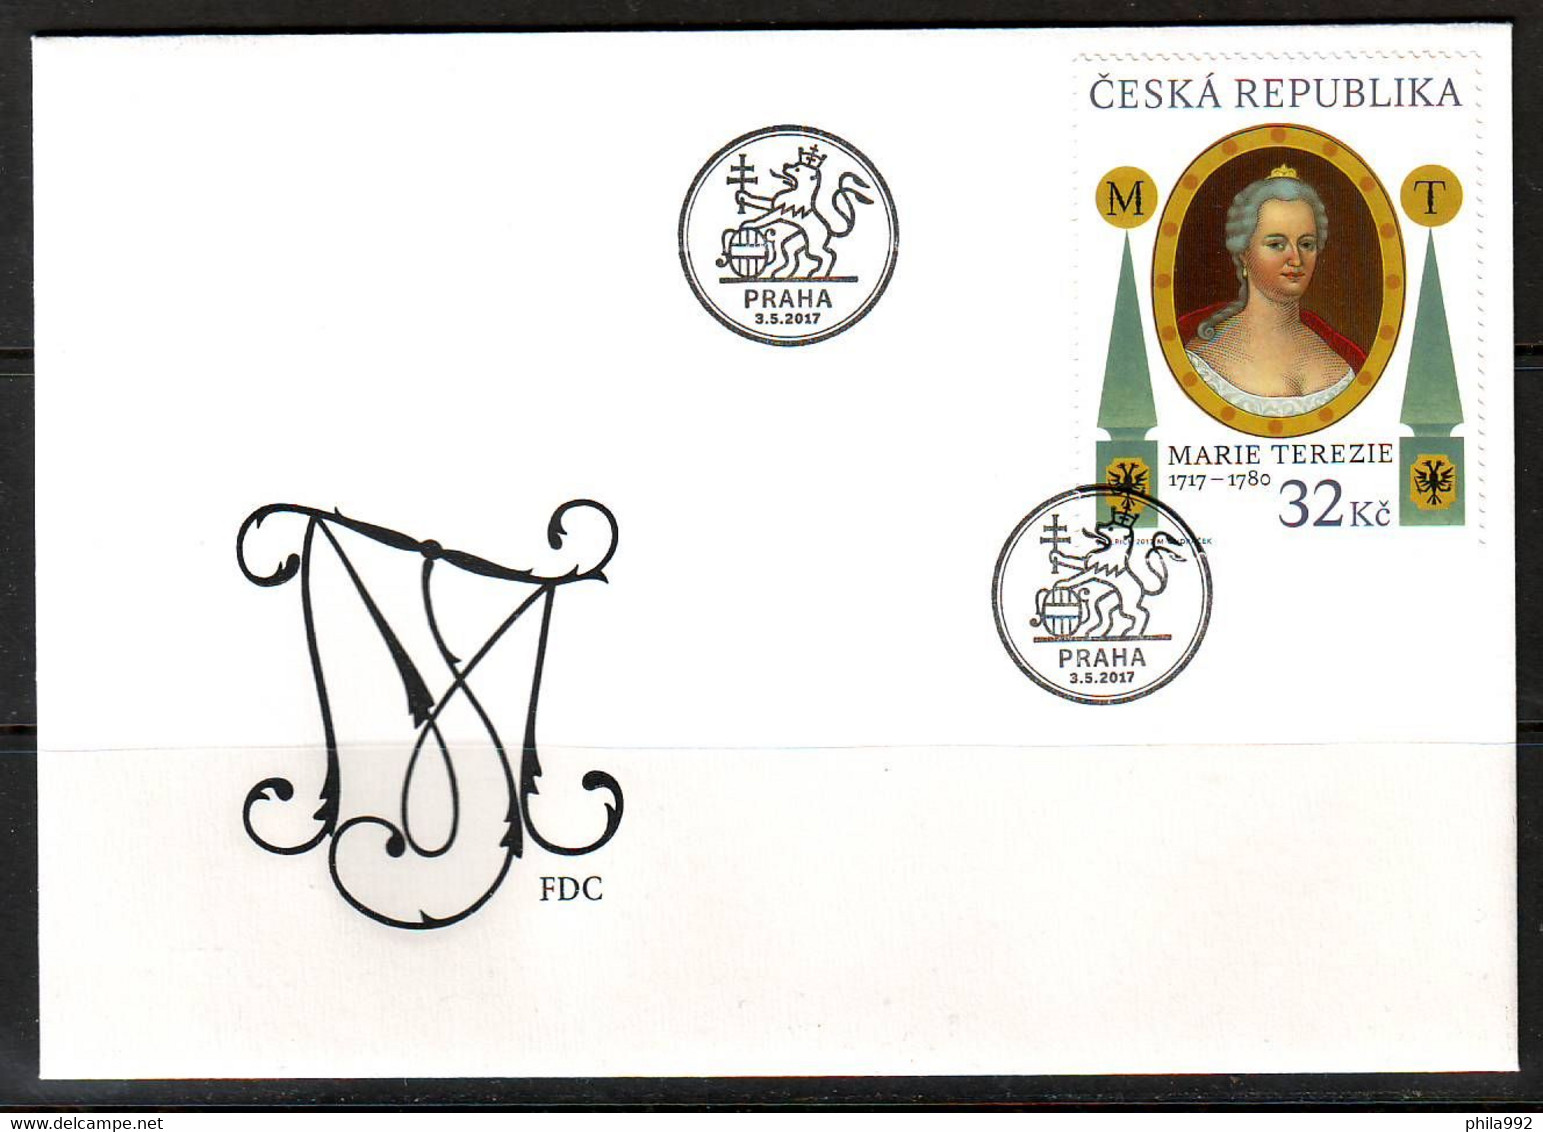 CZECH REPUBLIC 2017 Marija Teresia 1717-1780 FDC - Covers & Documents